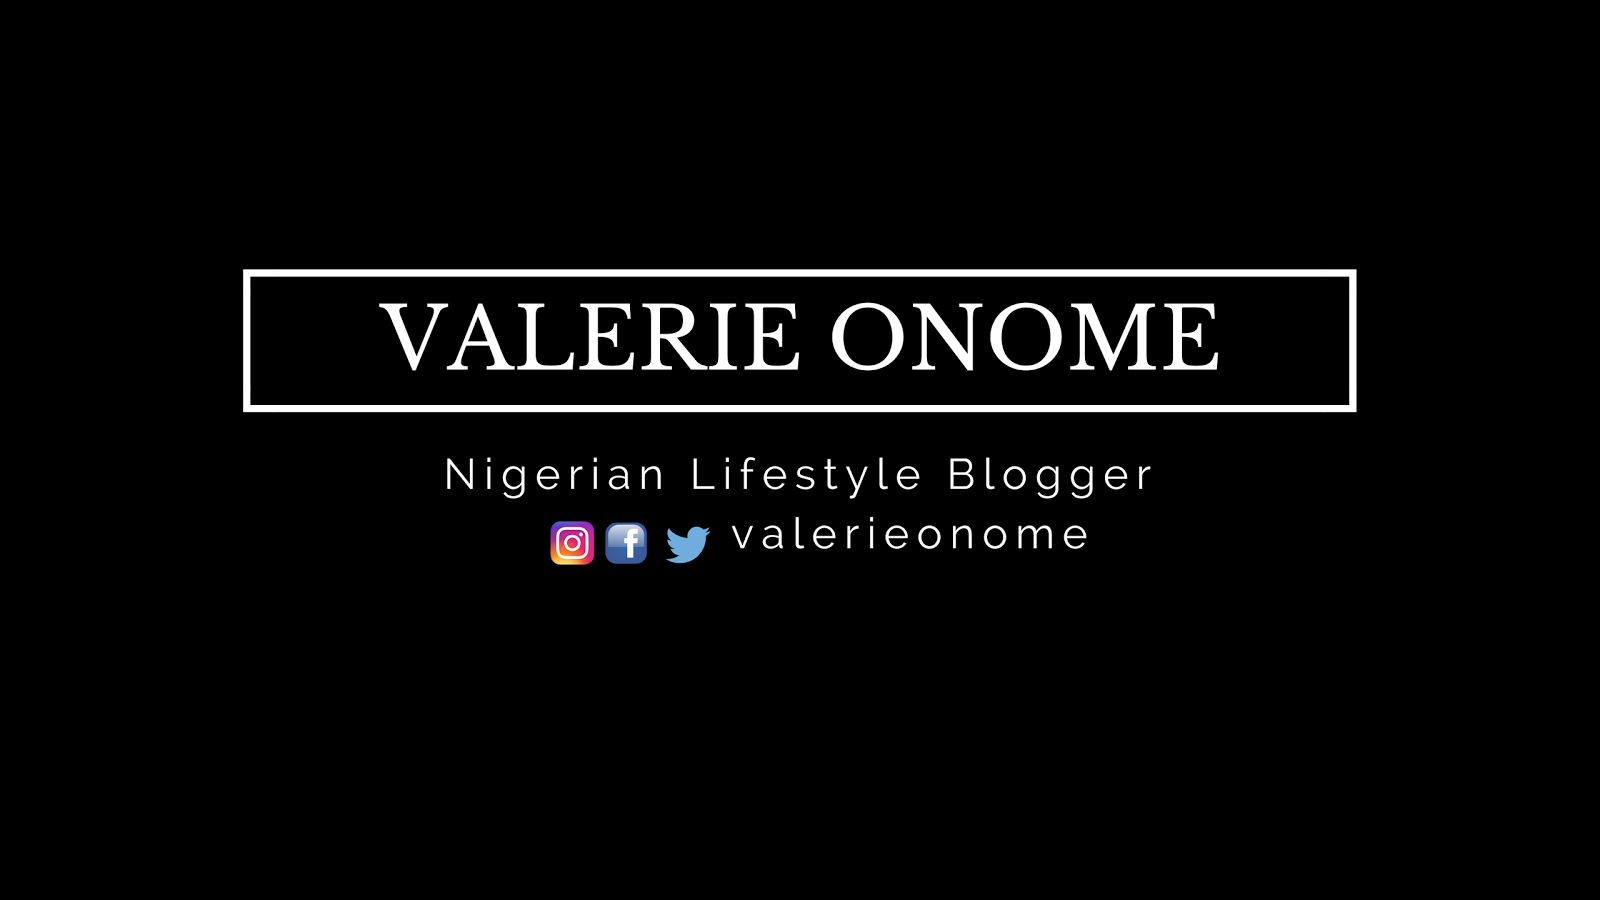  Valerie Onome's Blog